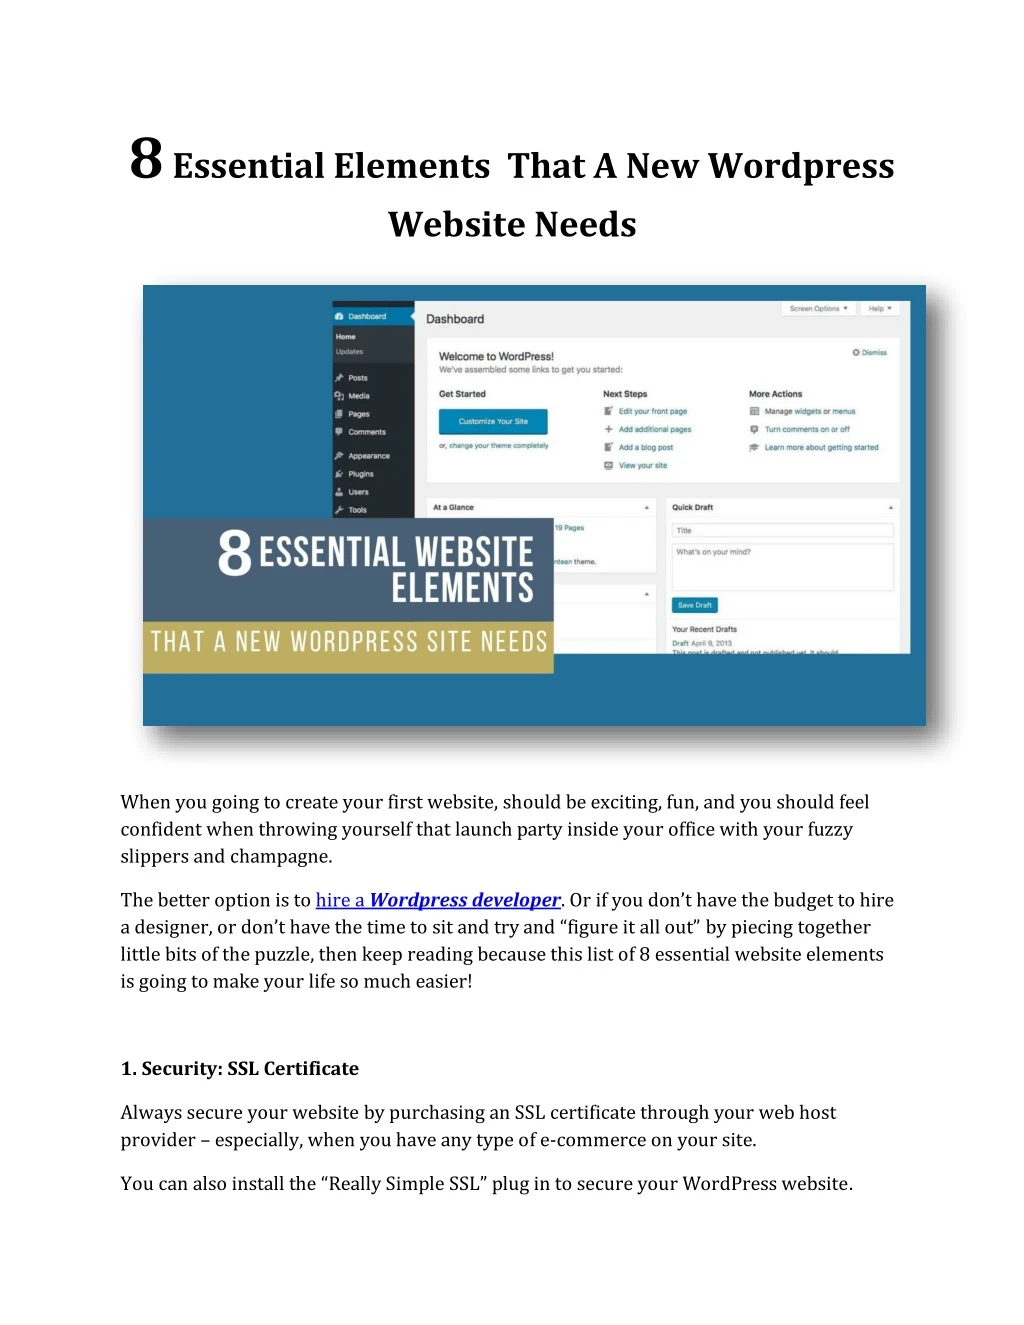 8 essential elements that a new wordpress website